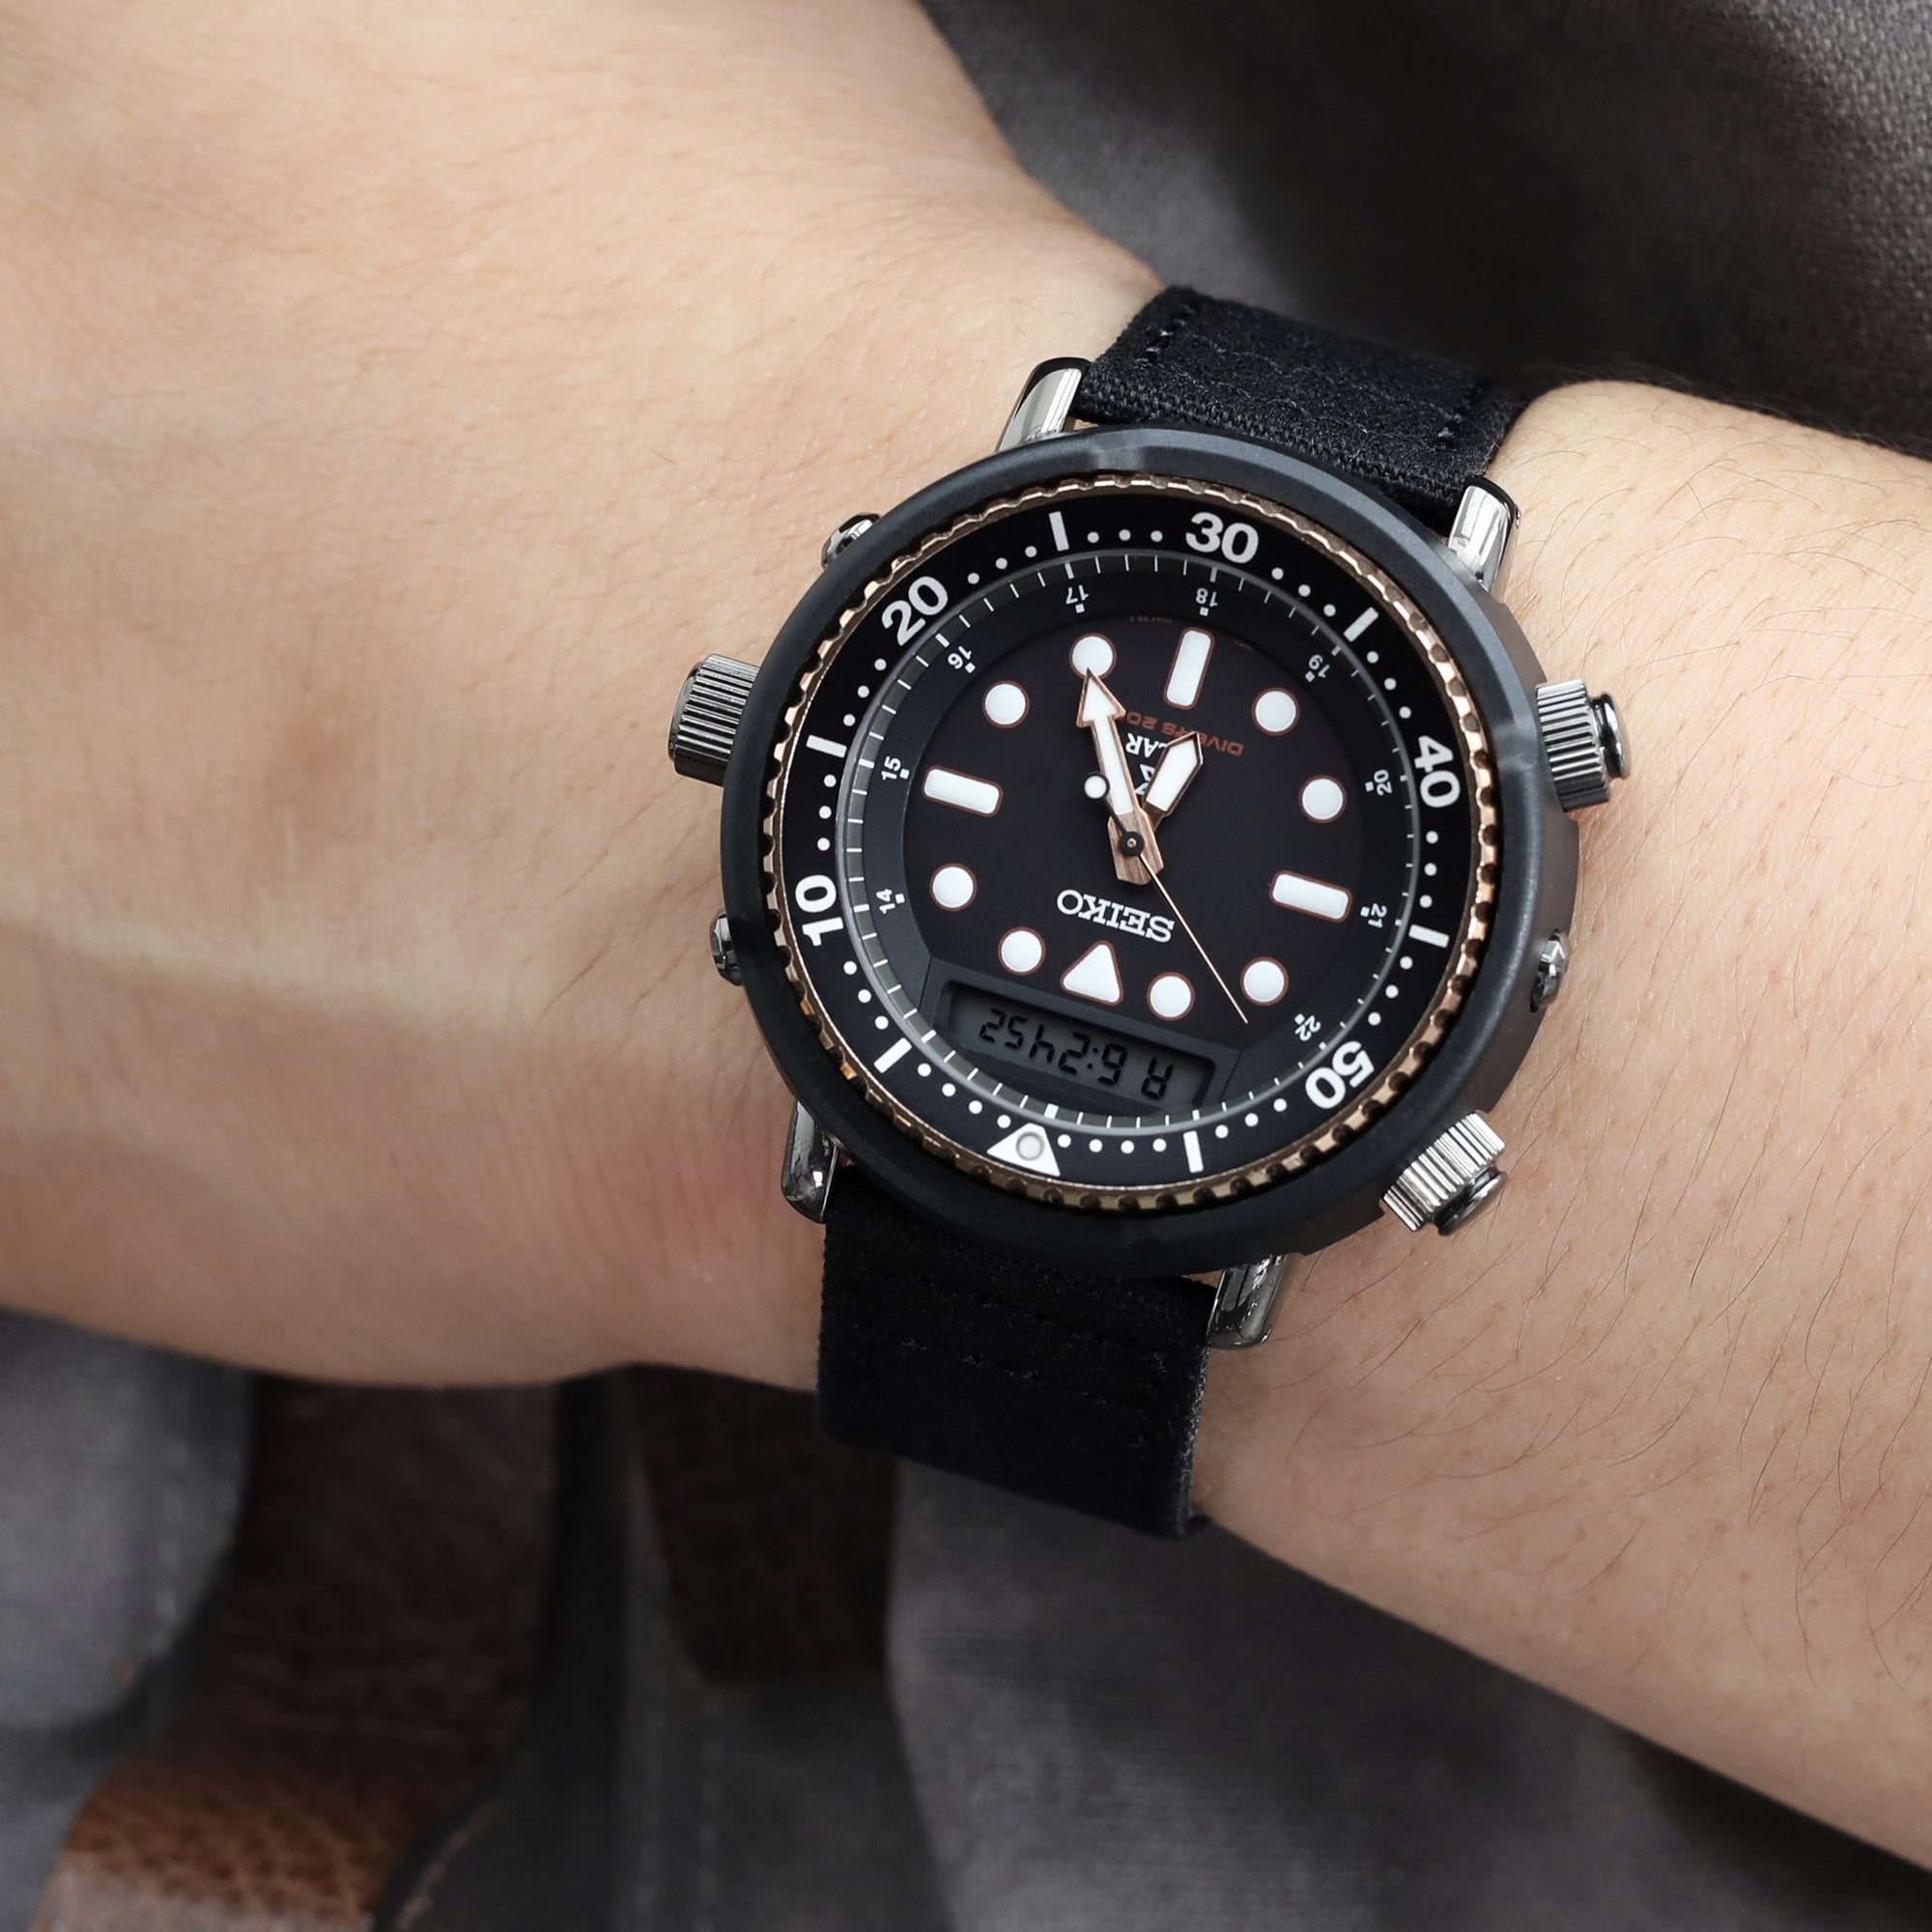 20mm Black Canvas strap | Shop online at REC Watches